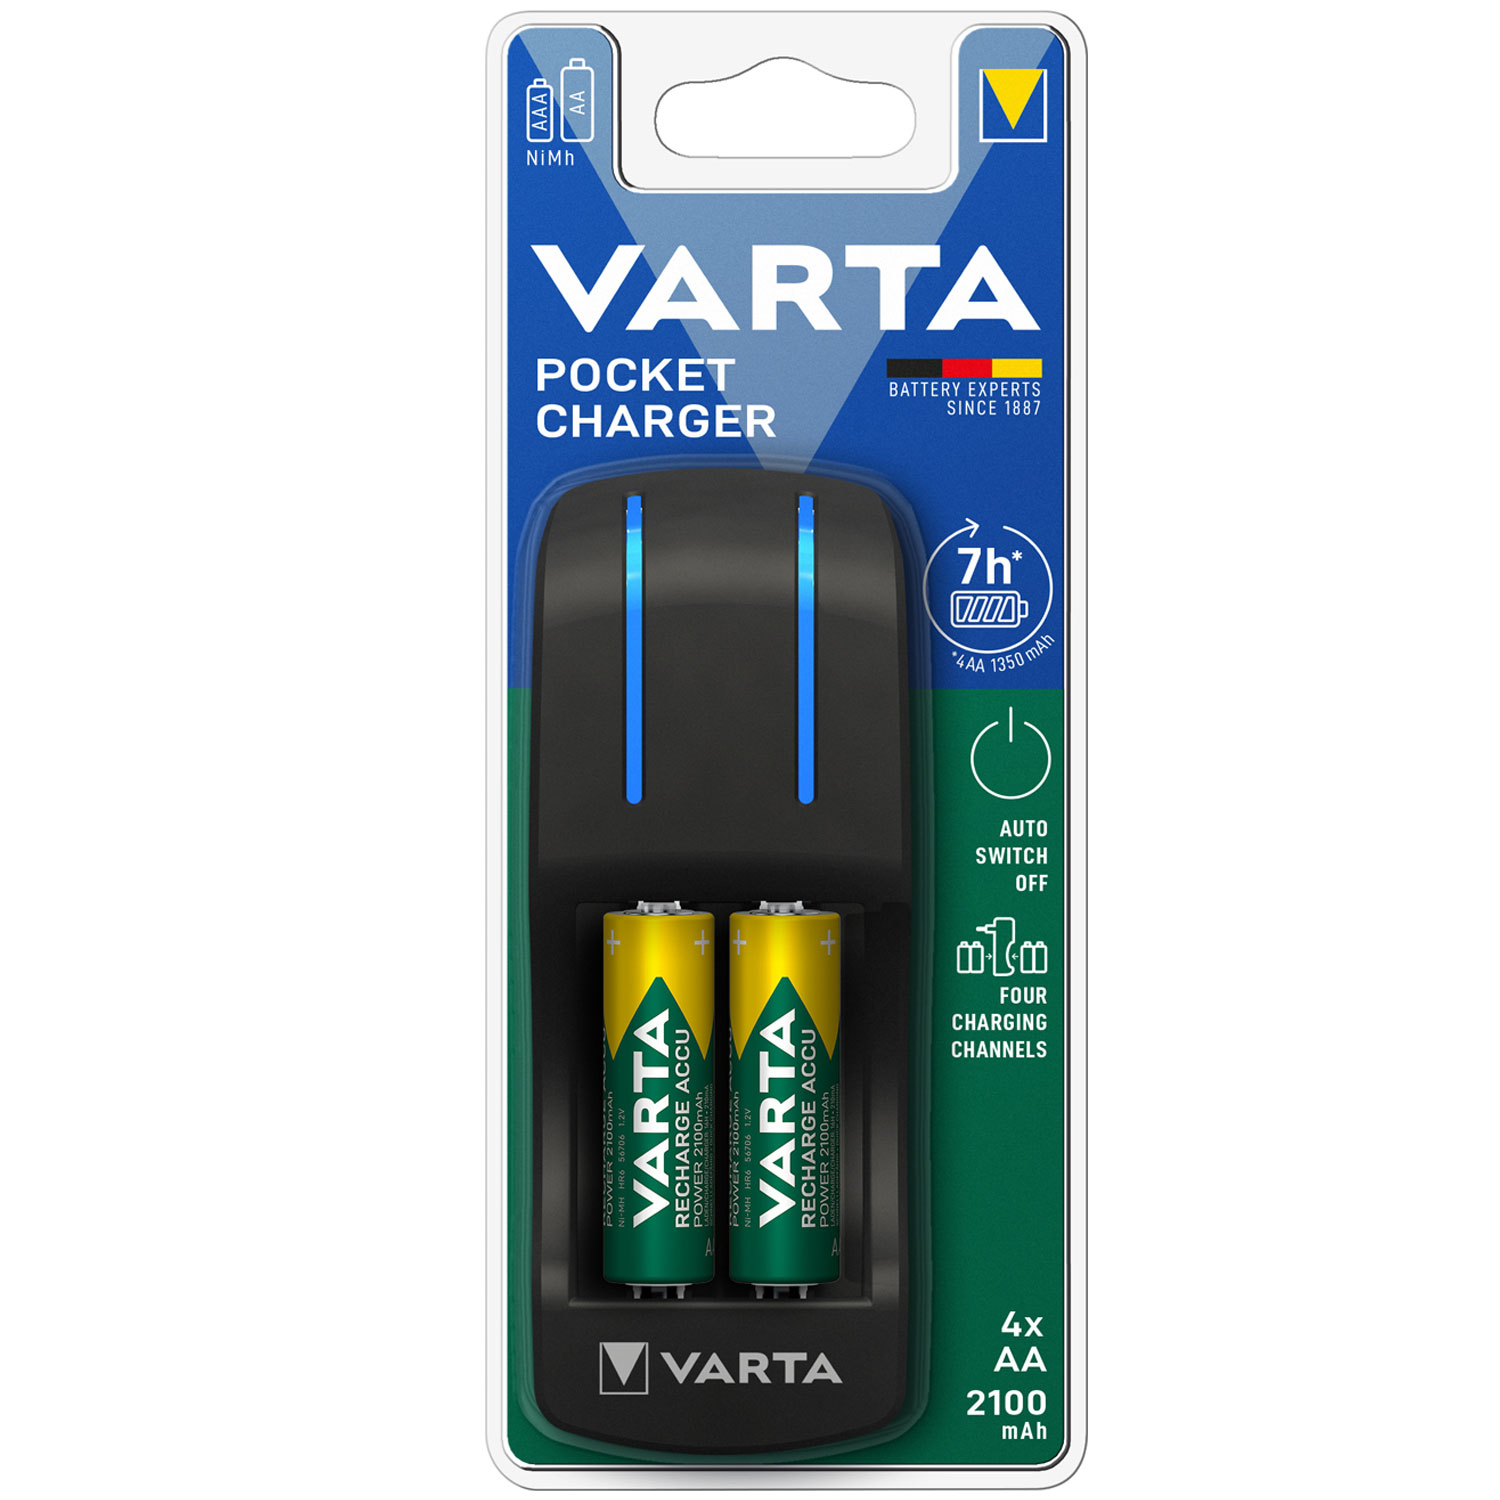 Varta Easy Energy Pocket Steckerlader für Mignon (AA) und Micro (AAA) Akkus inkl. 4x AA Akkus